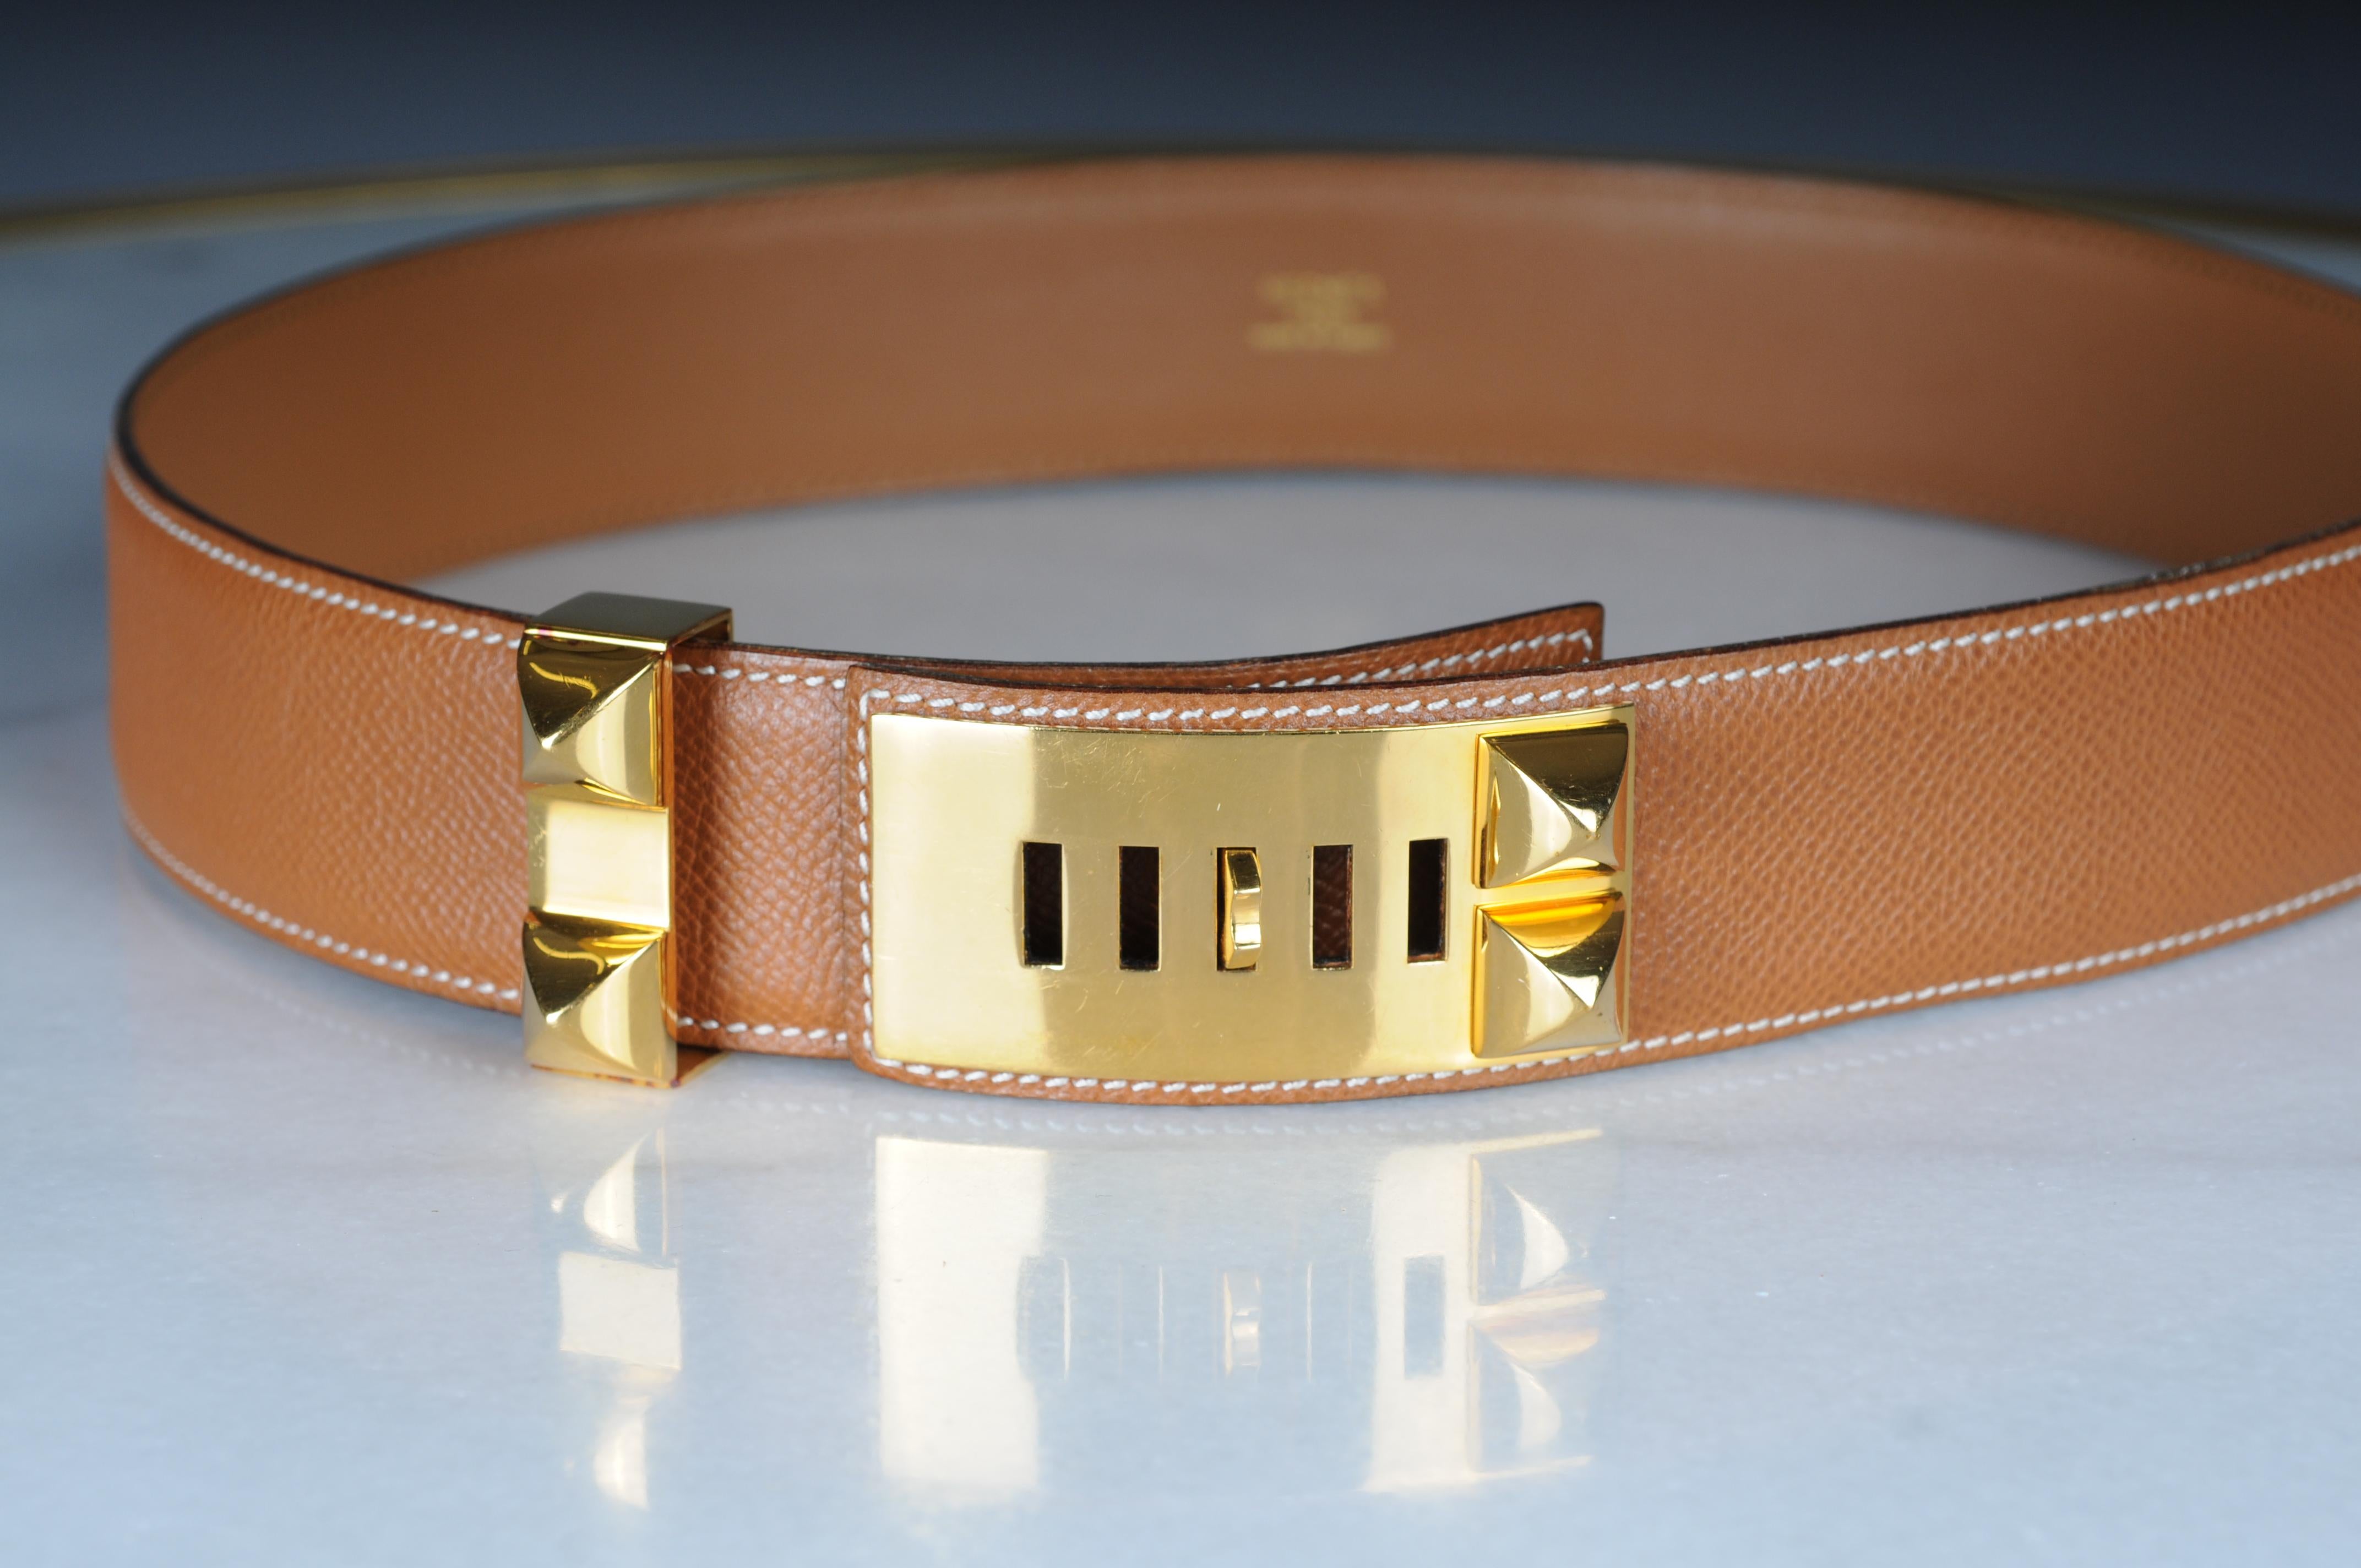 Hermes Collier de chien leather belt brown gold  In Fair Condition For Sale In 10707, DE